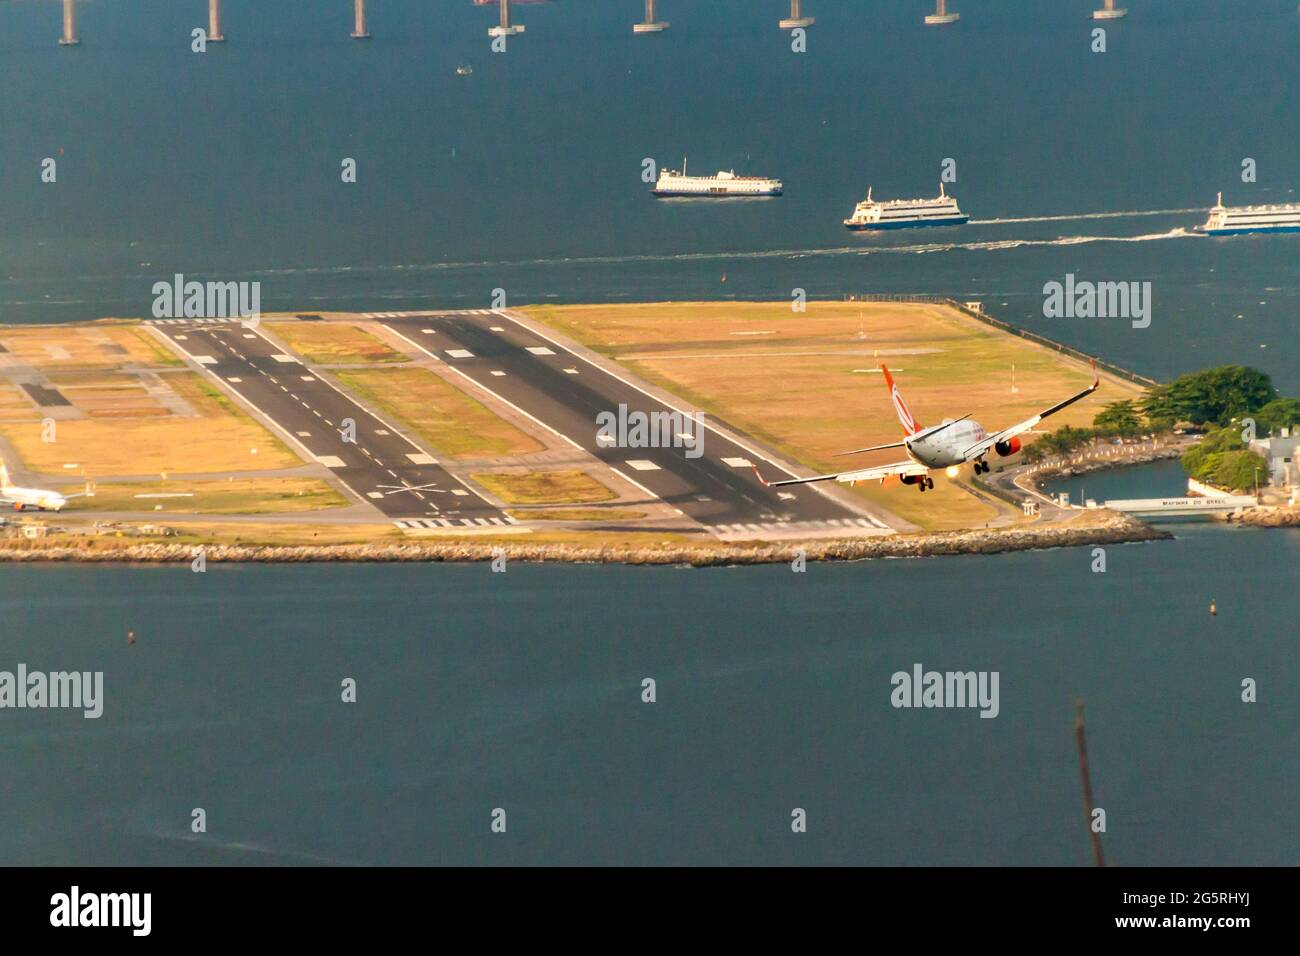 RIO DE JANEIRO, BRAZIL - JANUARY 28, 2015: Airplane of GOL airlines lands at Santos Dumont Airport in Rio de Janeiro, Brazil Stock Photo